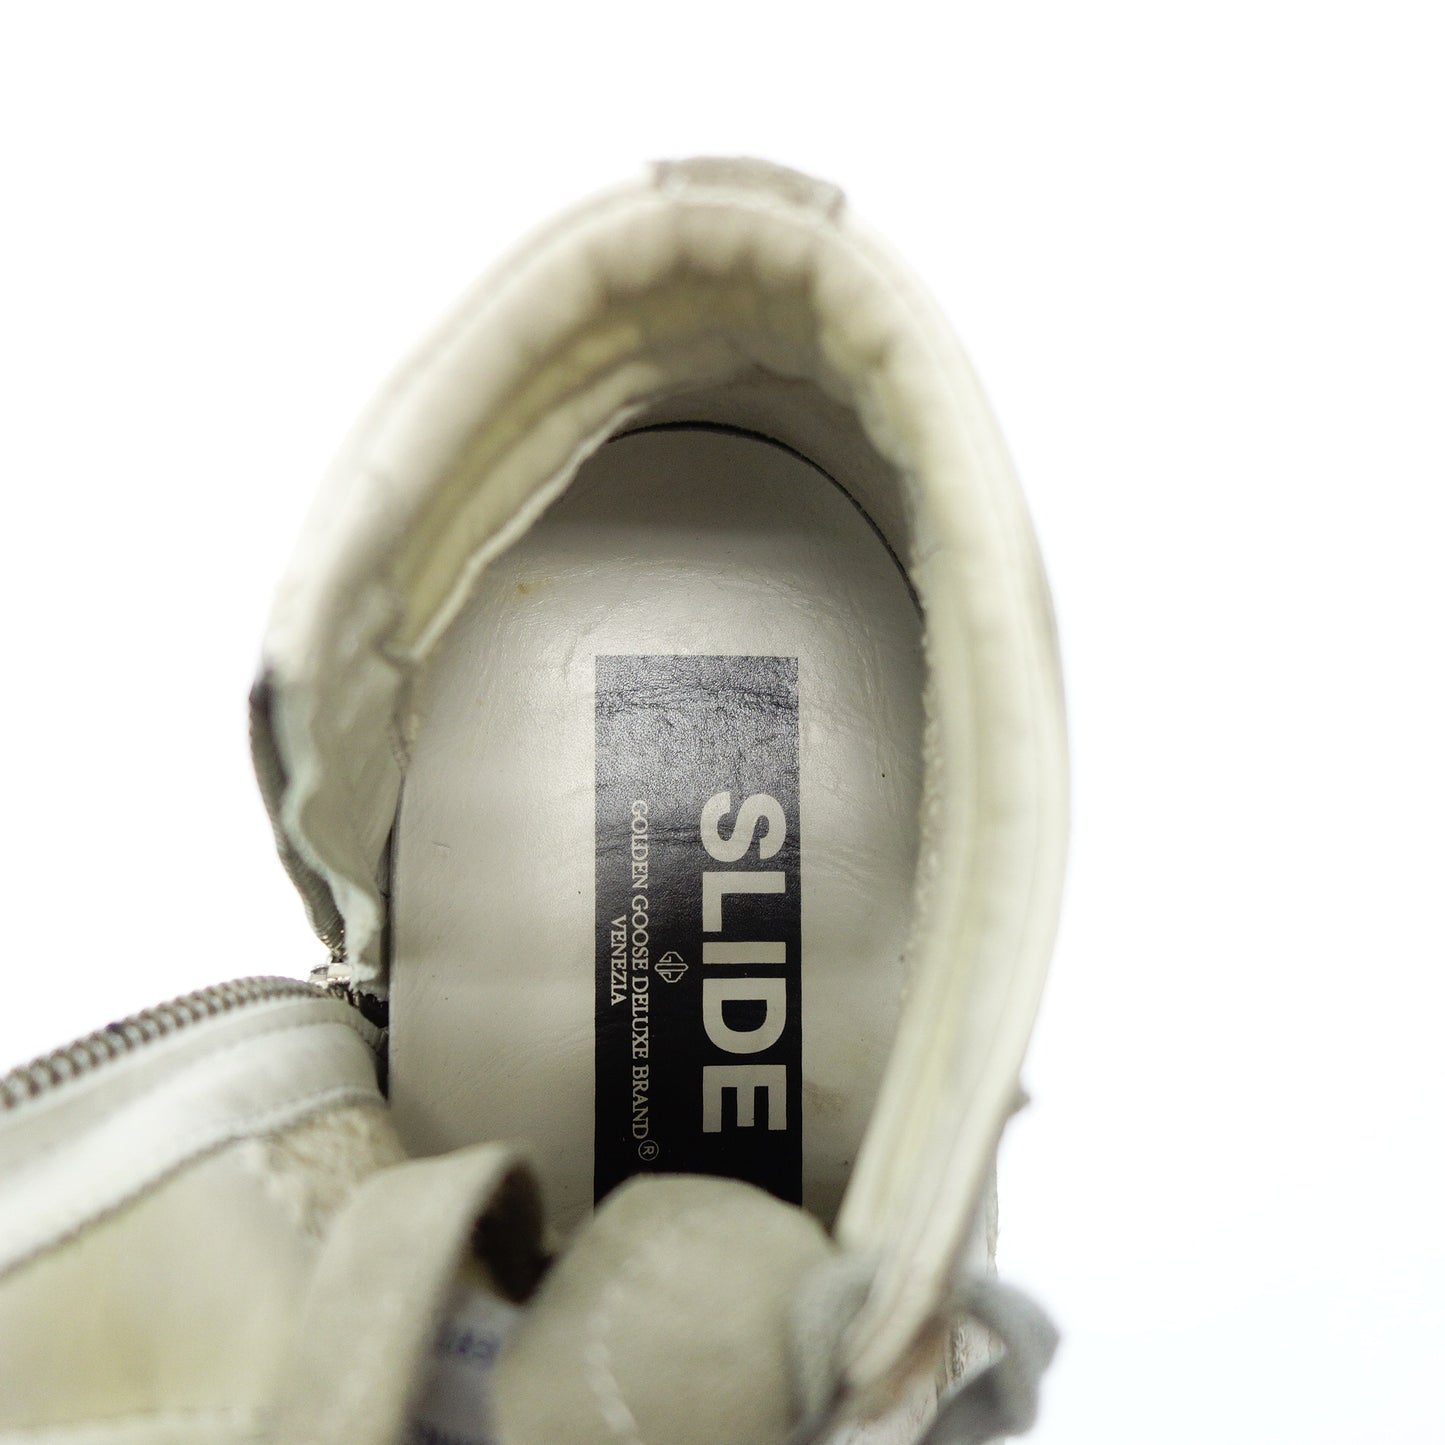 Good Condition ◆ Golden Goose Leather Sneakers Side Zip Vintage Processing SLIDE Men's 39 Gray GOLDEN GOOSE [AFC3] 